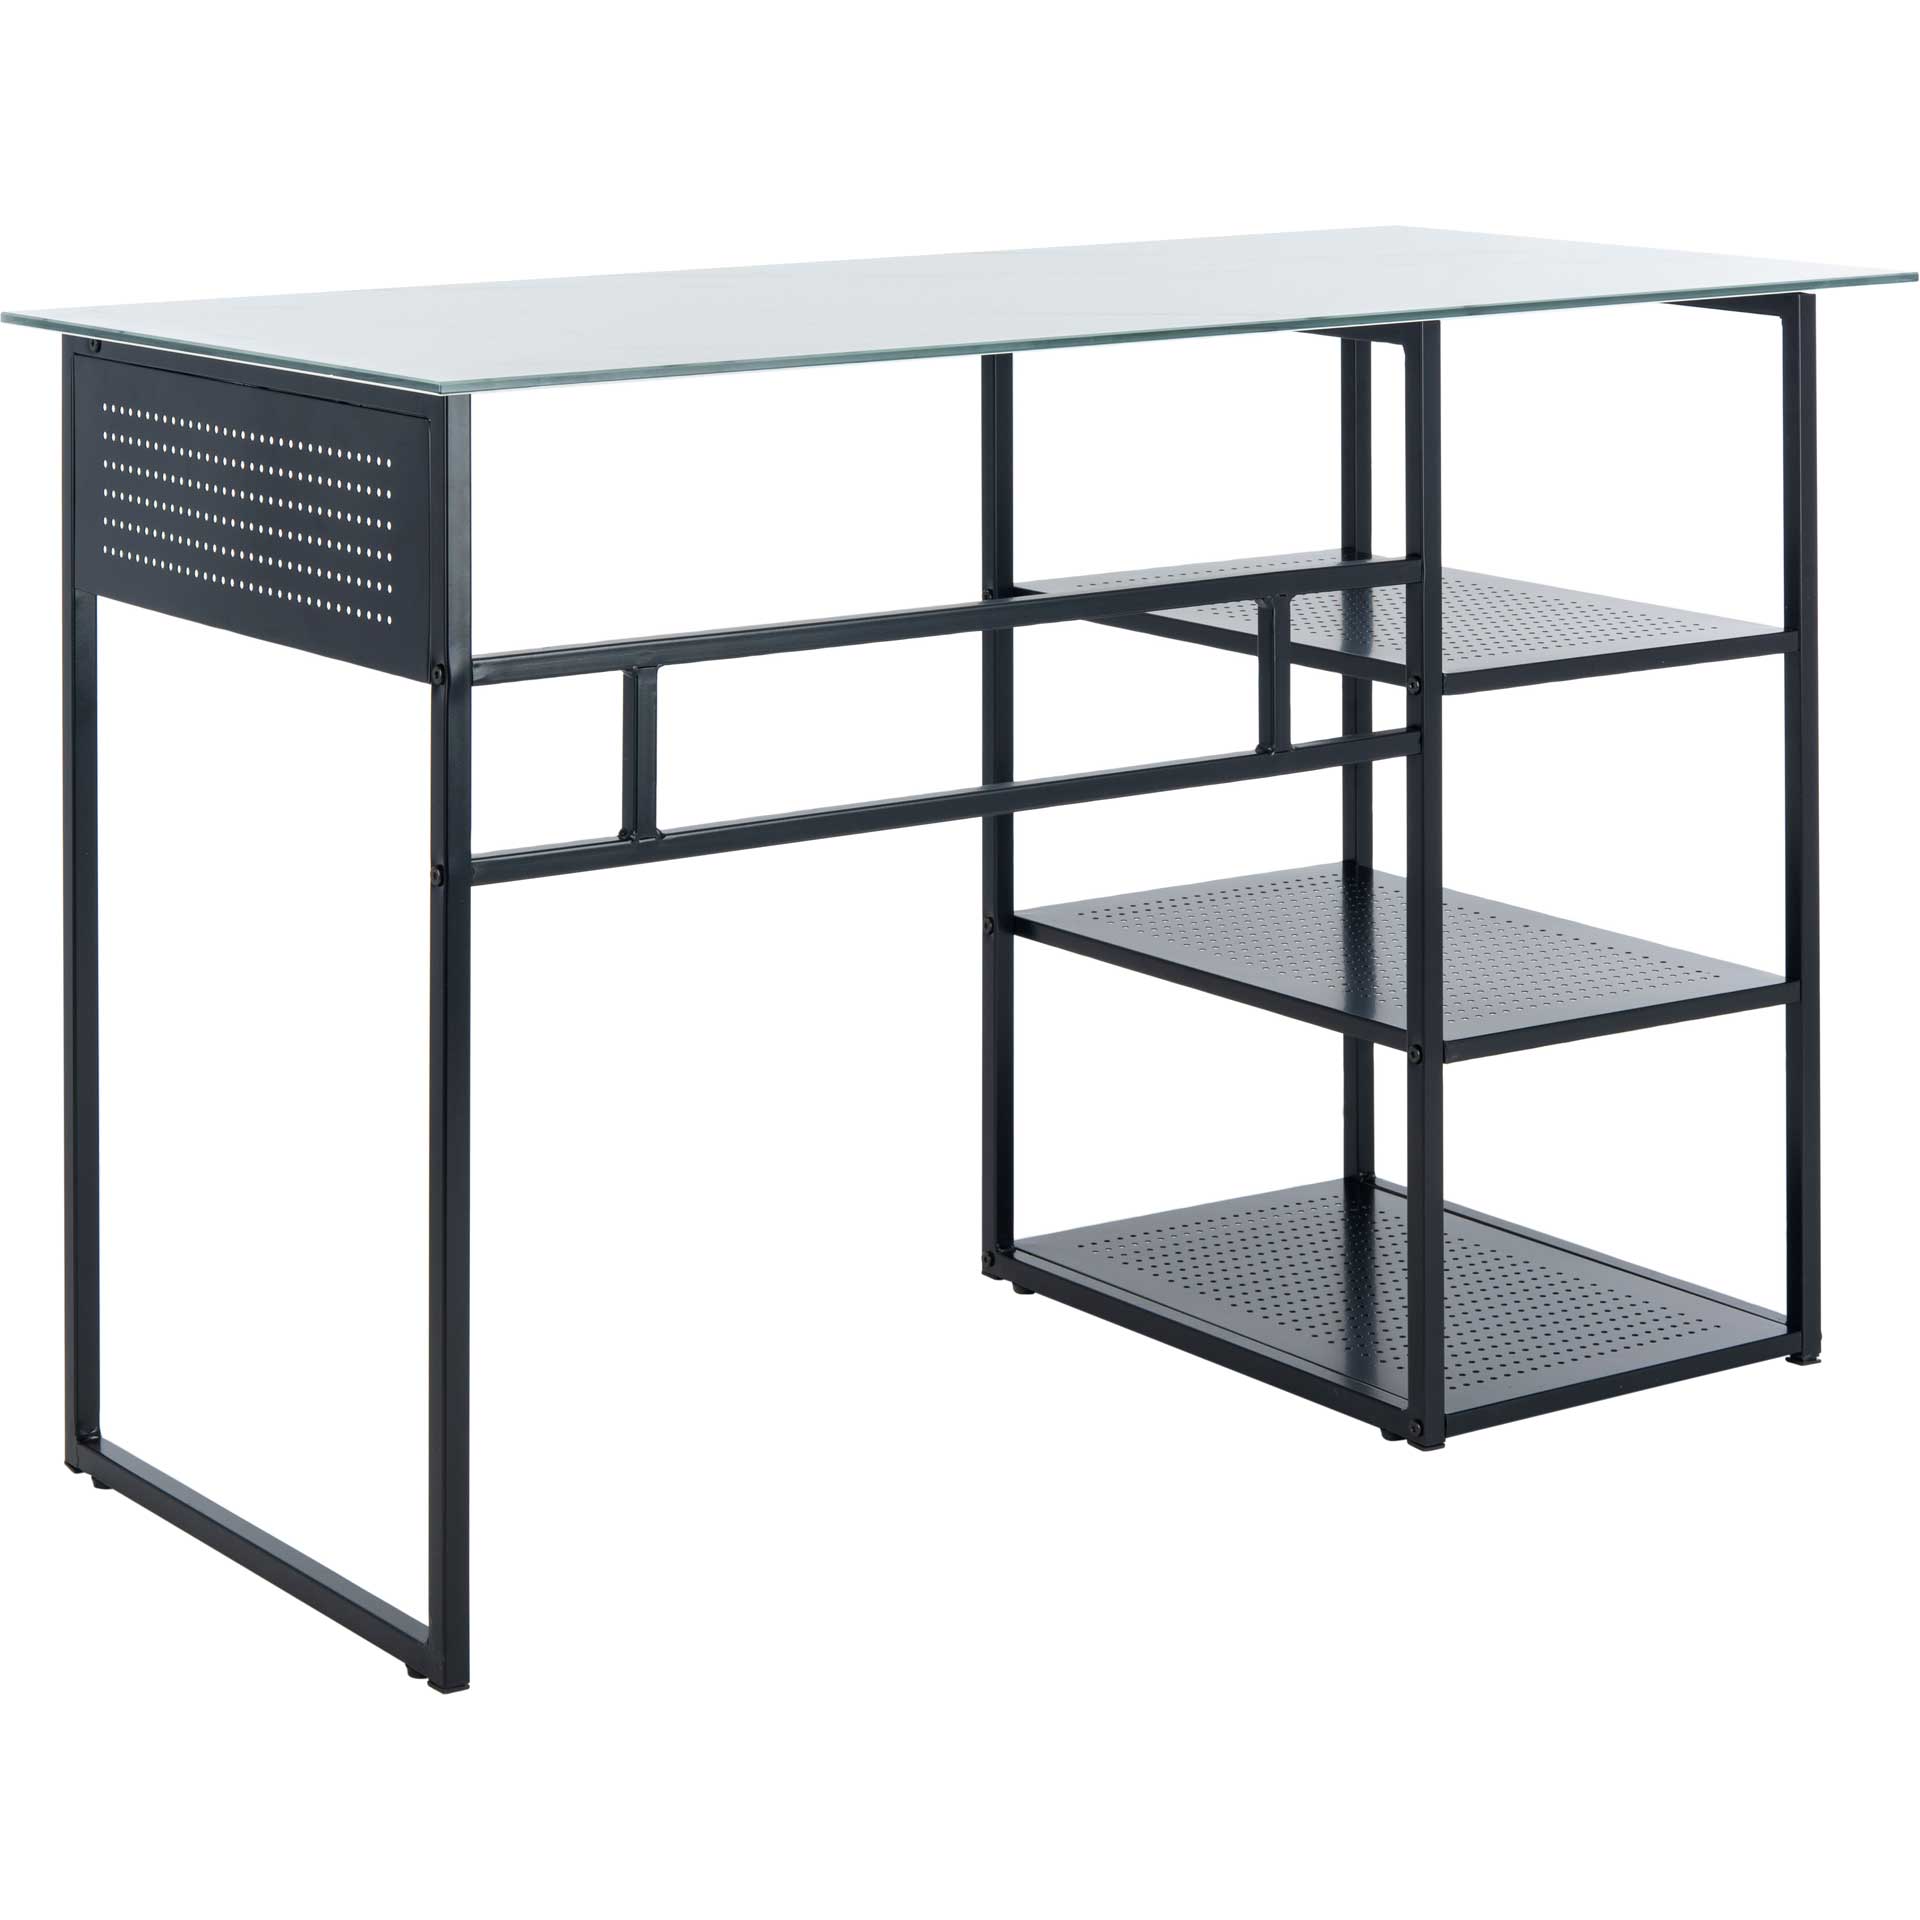 Xylia 3 Shelf Glass Top Desk White/Black